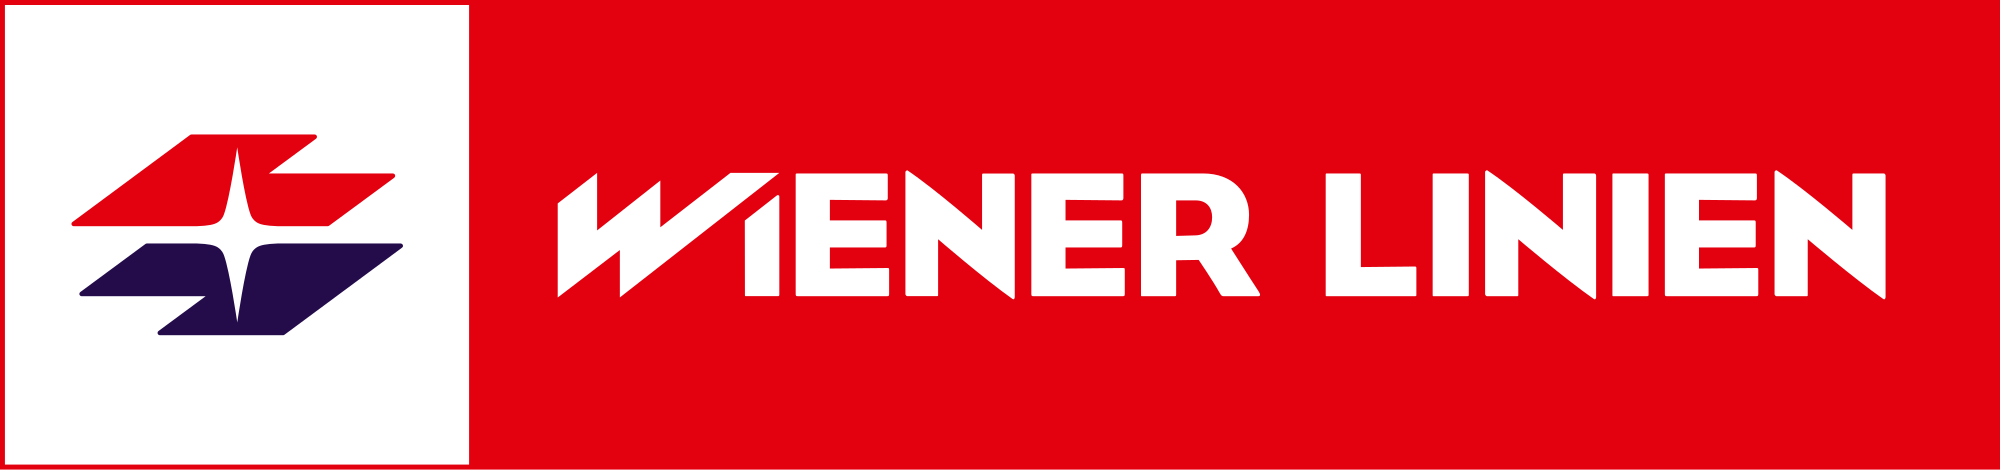 2000px-wiener_linien_logo.svg.png